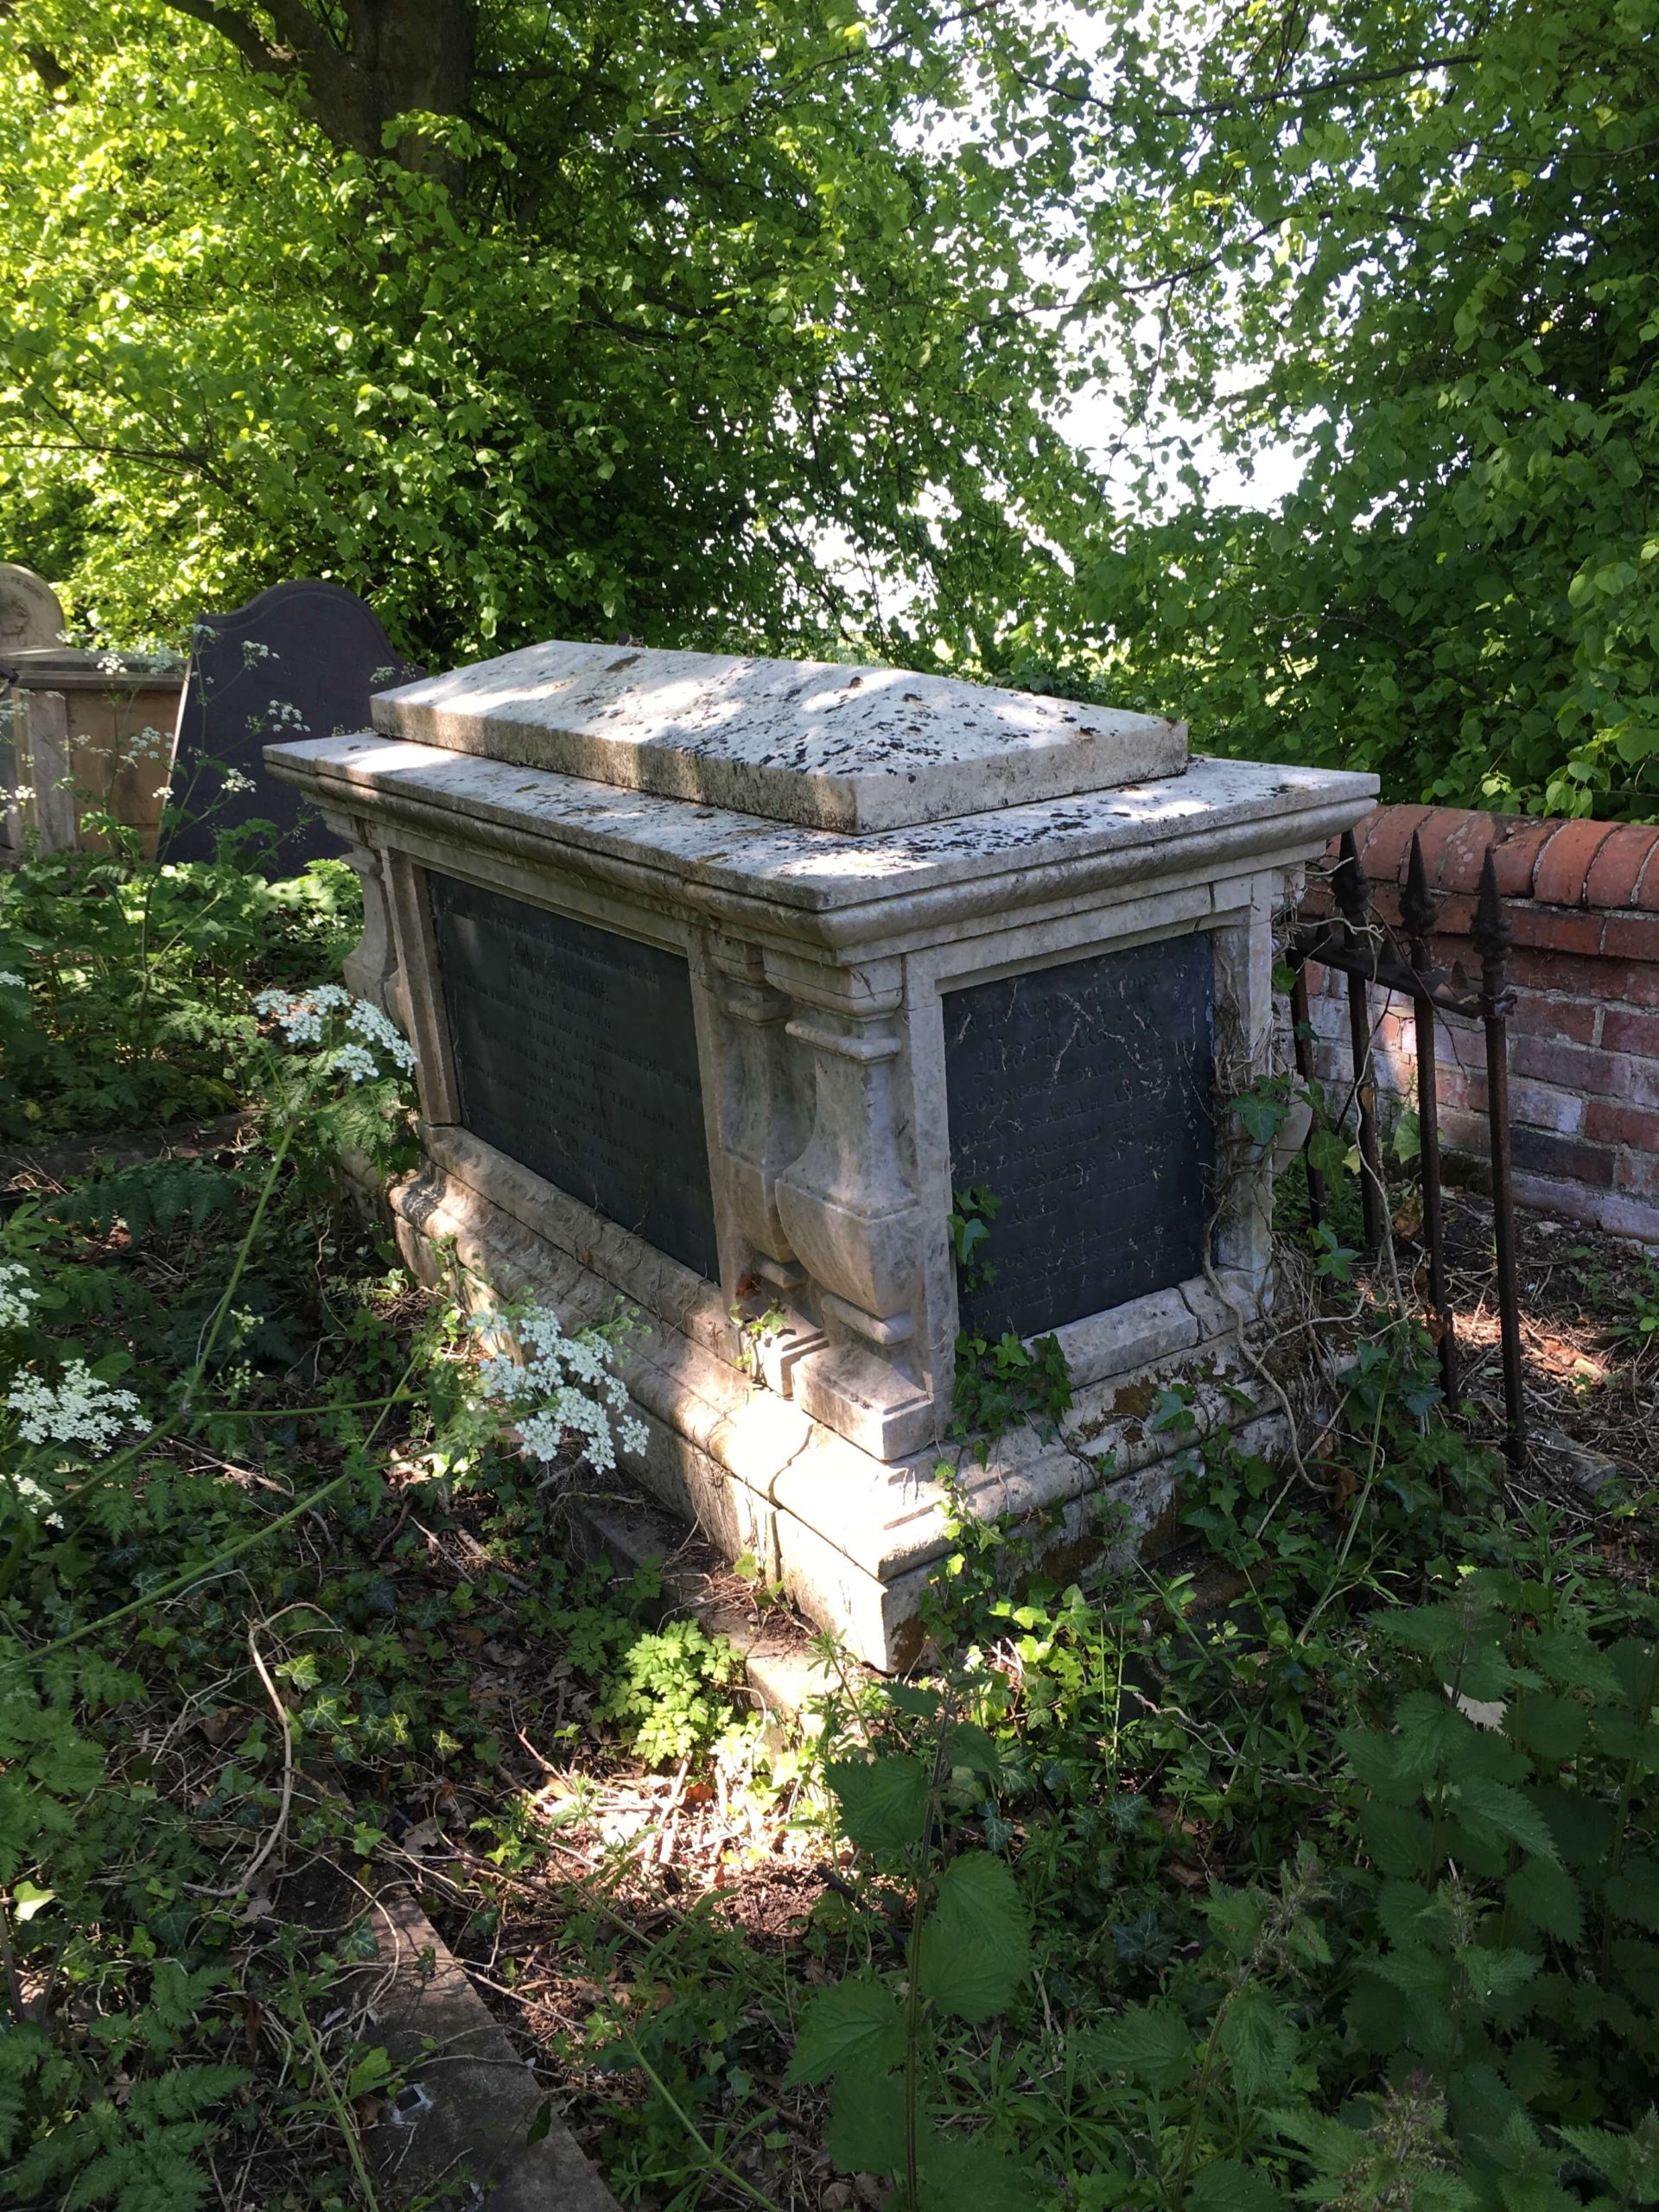 Chest tomb in Church Langton Churchyard